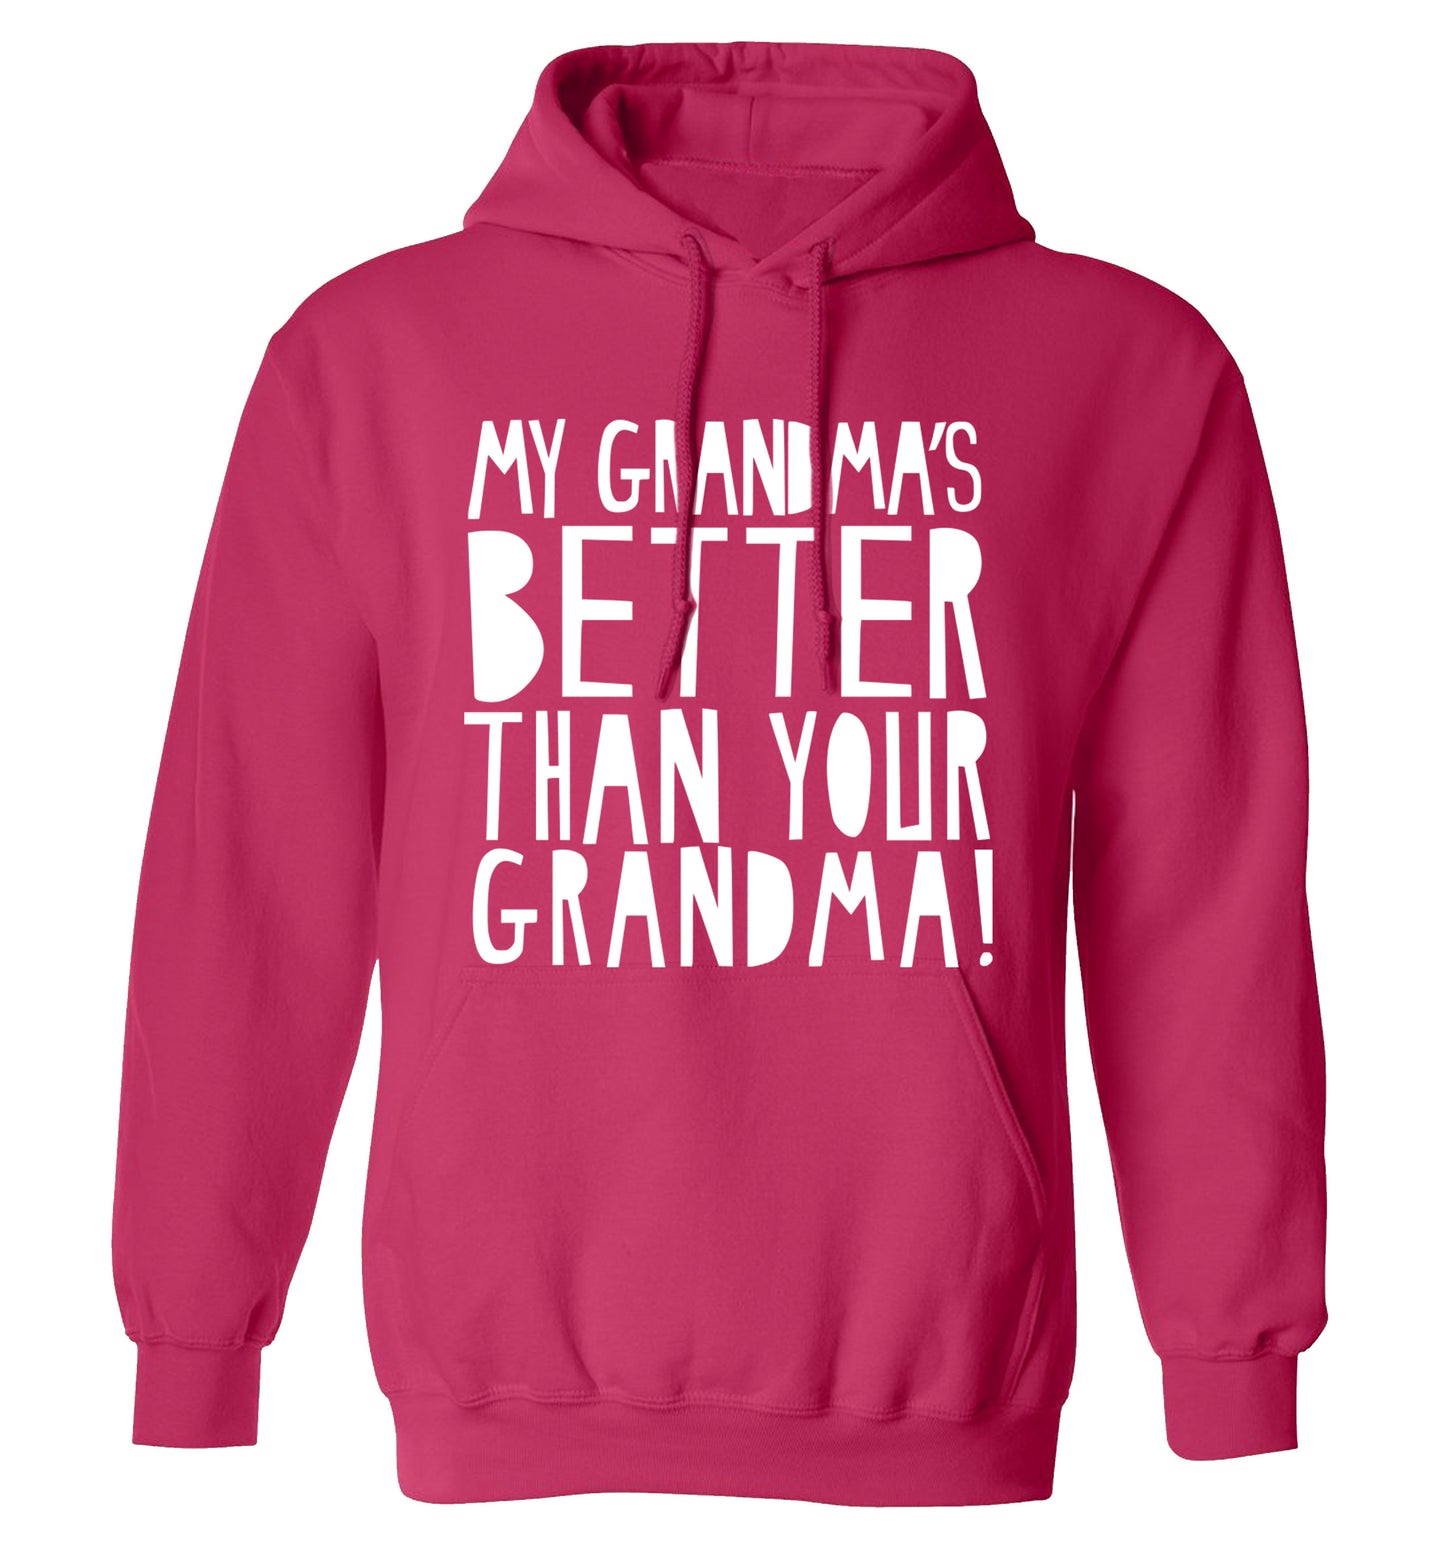 My grandma's better than your grandma adults unisex pink hoodie 2XL